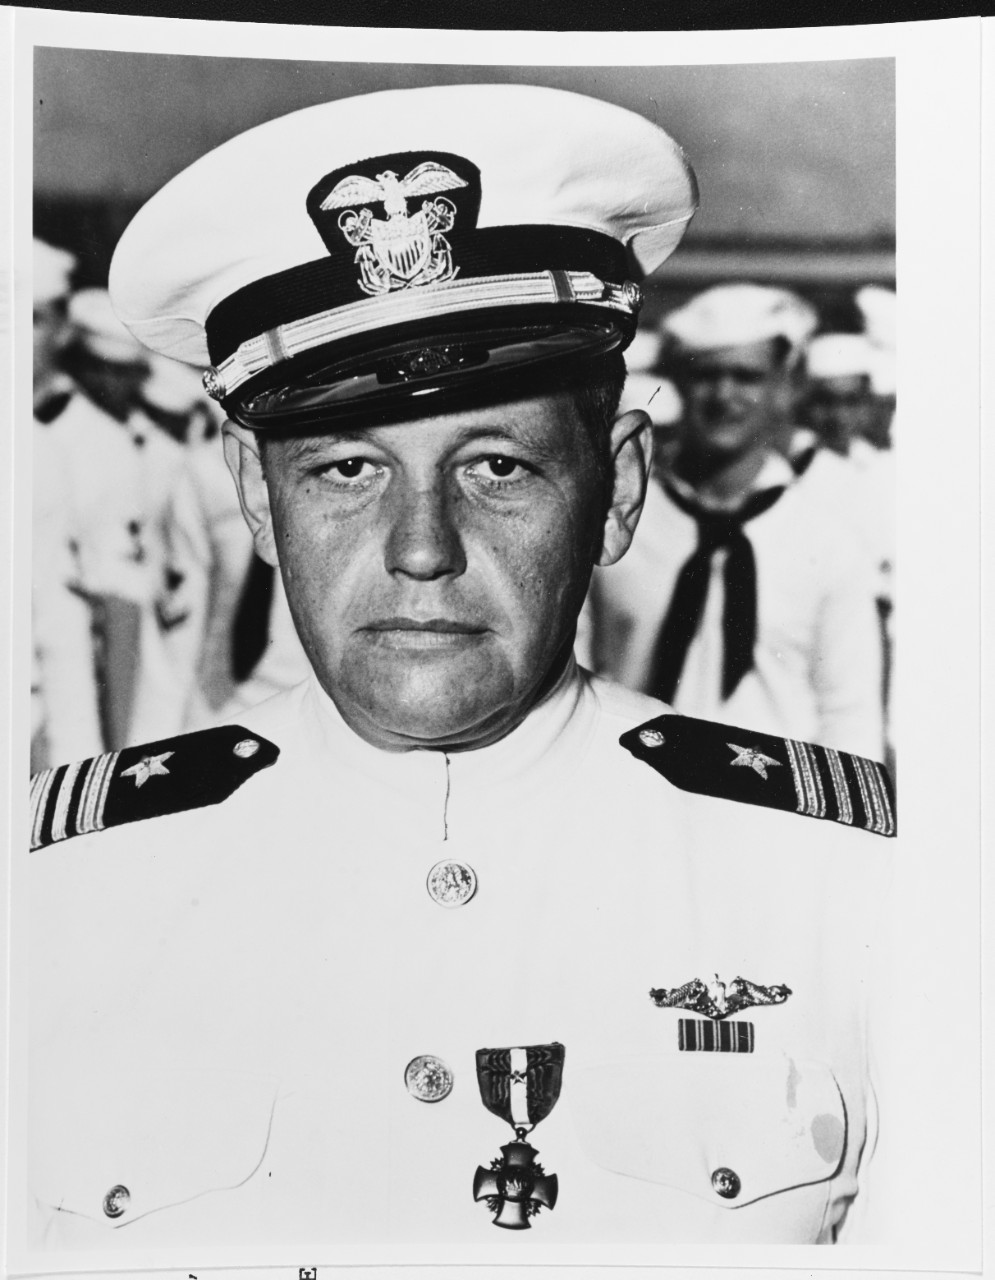 Photo #: 80-G-20016  Lieutenant Commander William H. Brockman, Jr., USN